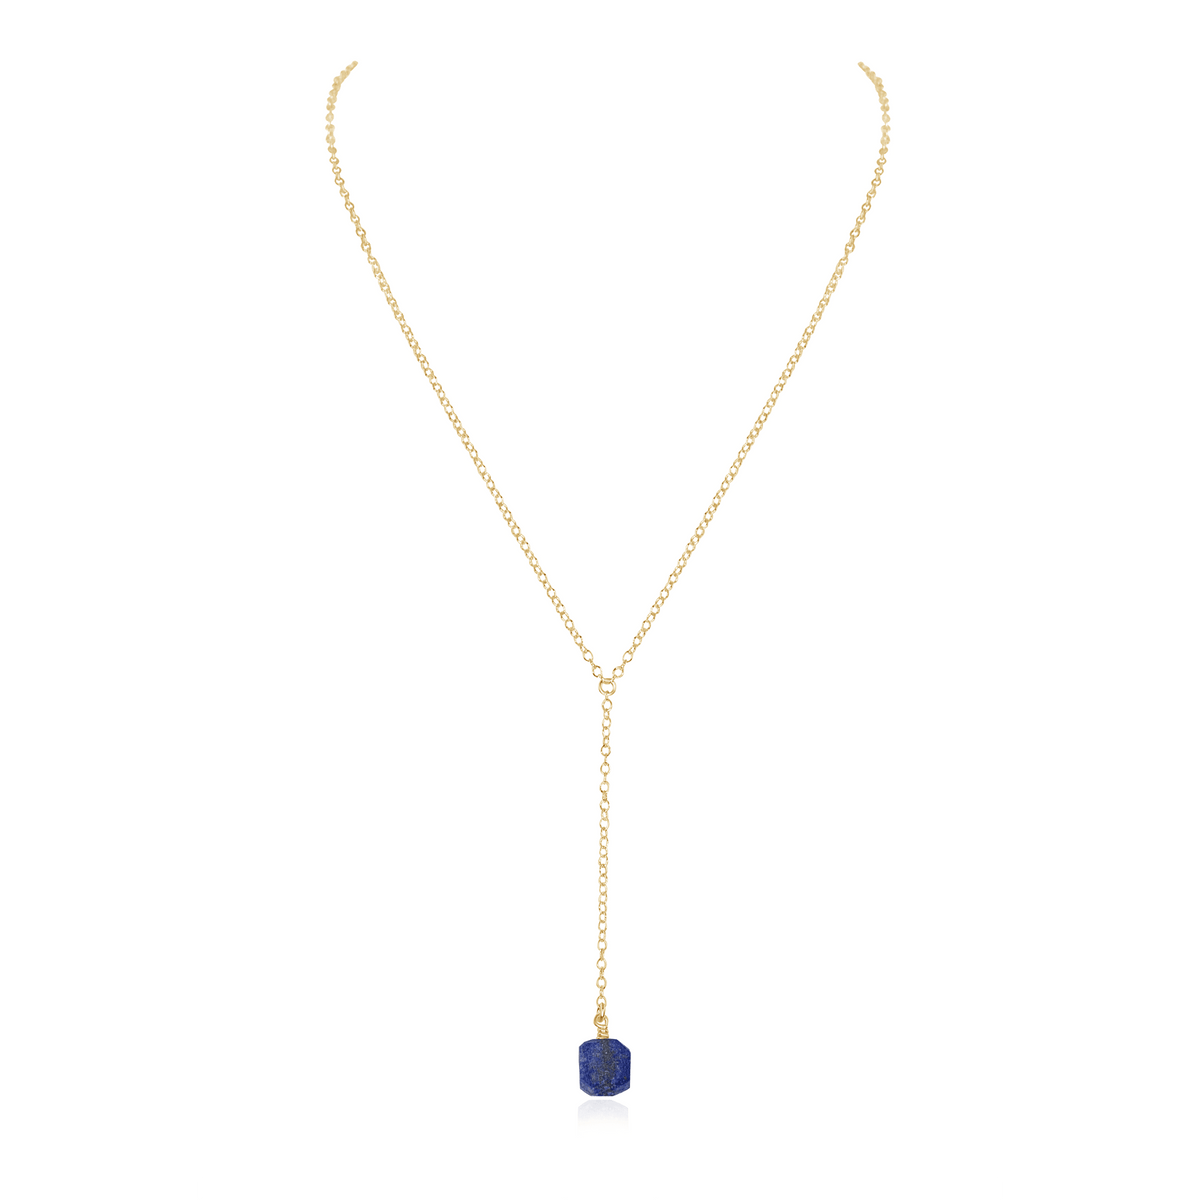 Raw Lapis Lazuli Crystal Lariat Necklace - Raw Lapis Lazuli Crystal Lariat Necklace - 14k Gold Fill - Luna Tide Handmade Crystal Jewellery